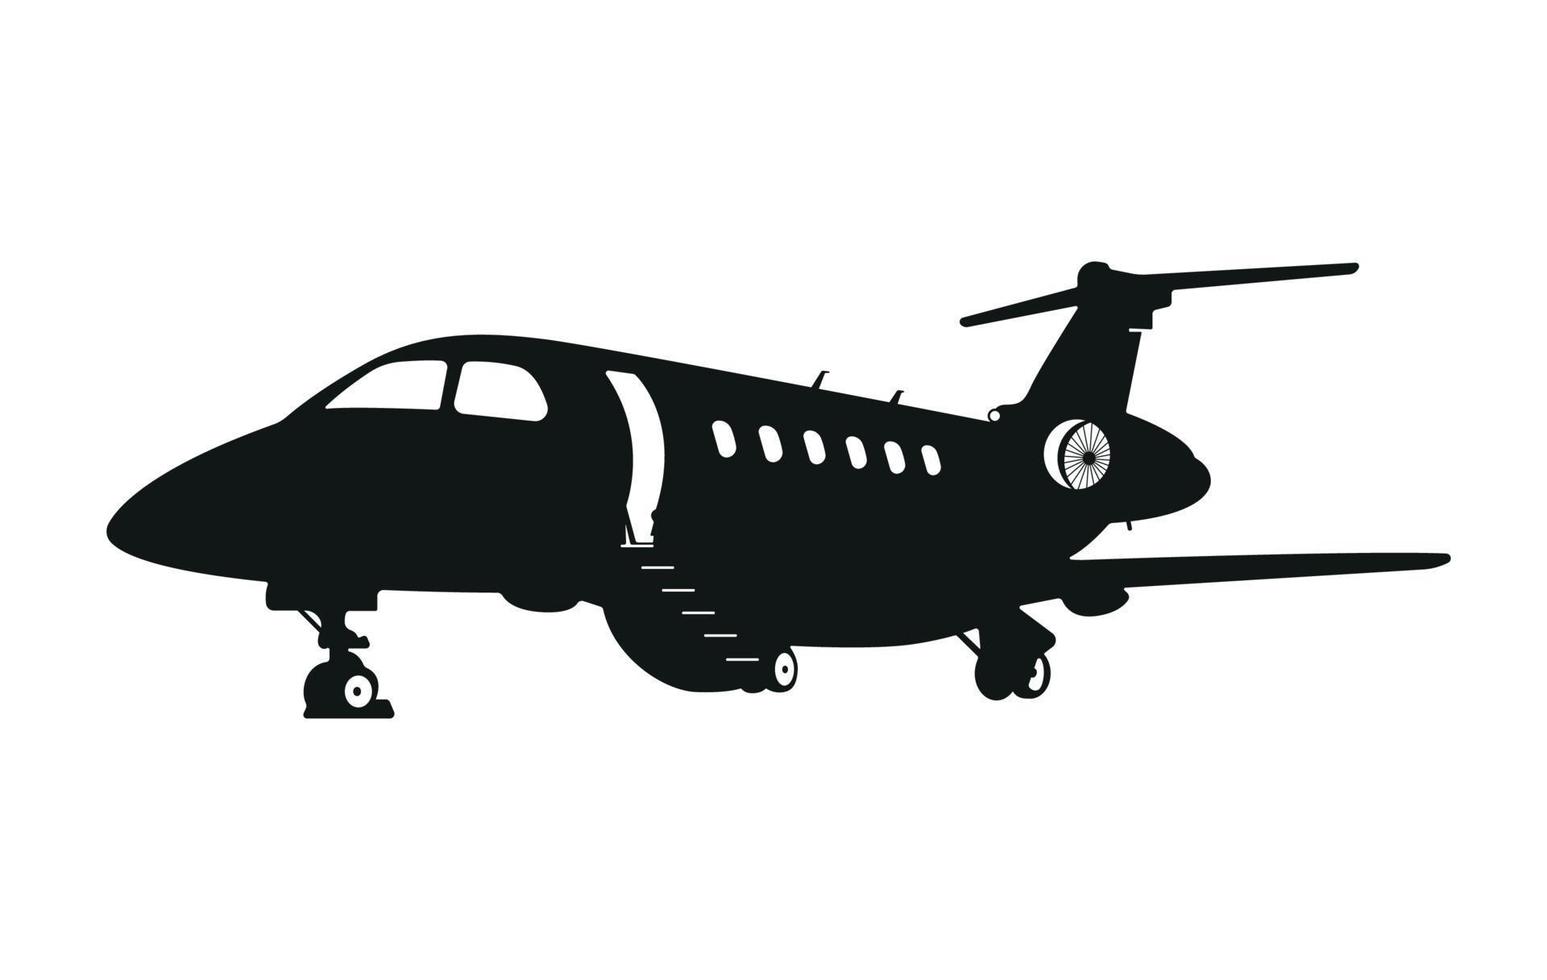 Private Jet Silhouette, Civil Business Jet Aircraft Illustration. vector